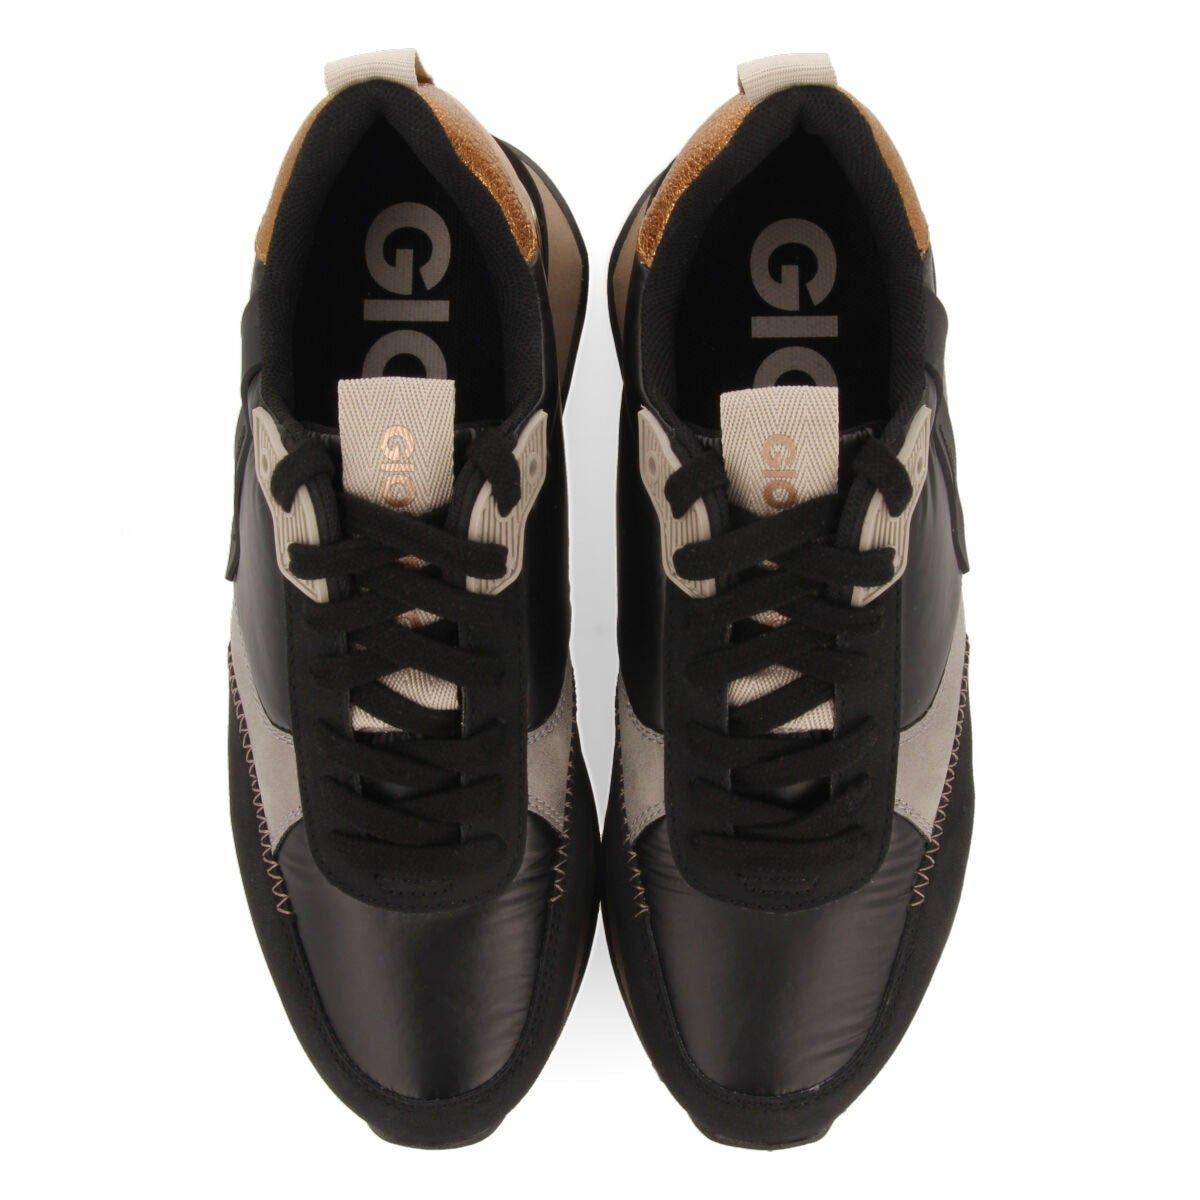 Gioseppo  Sneakers für Frauen  Gladsaxe 